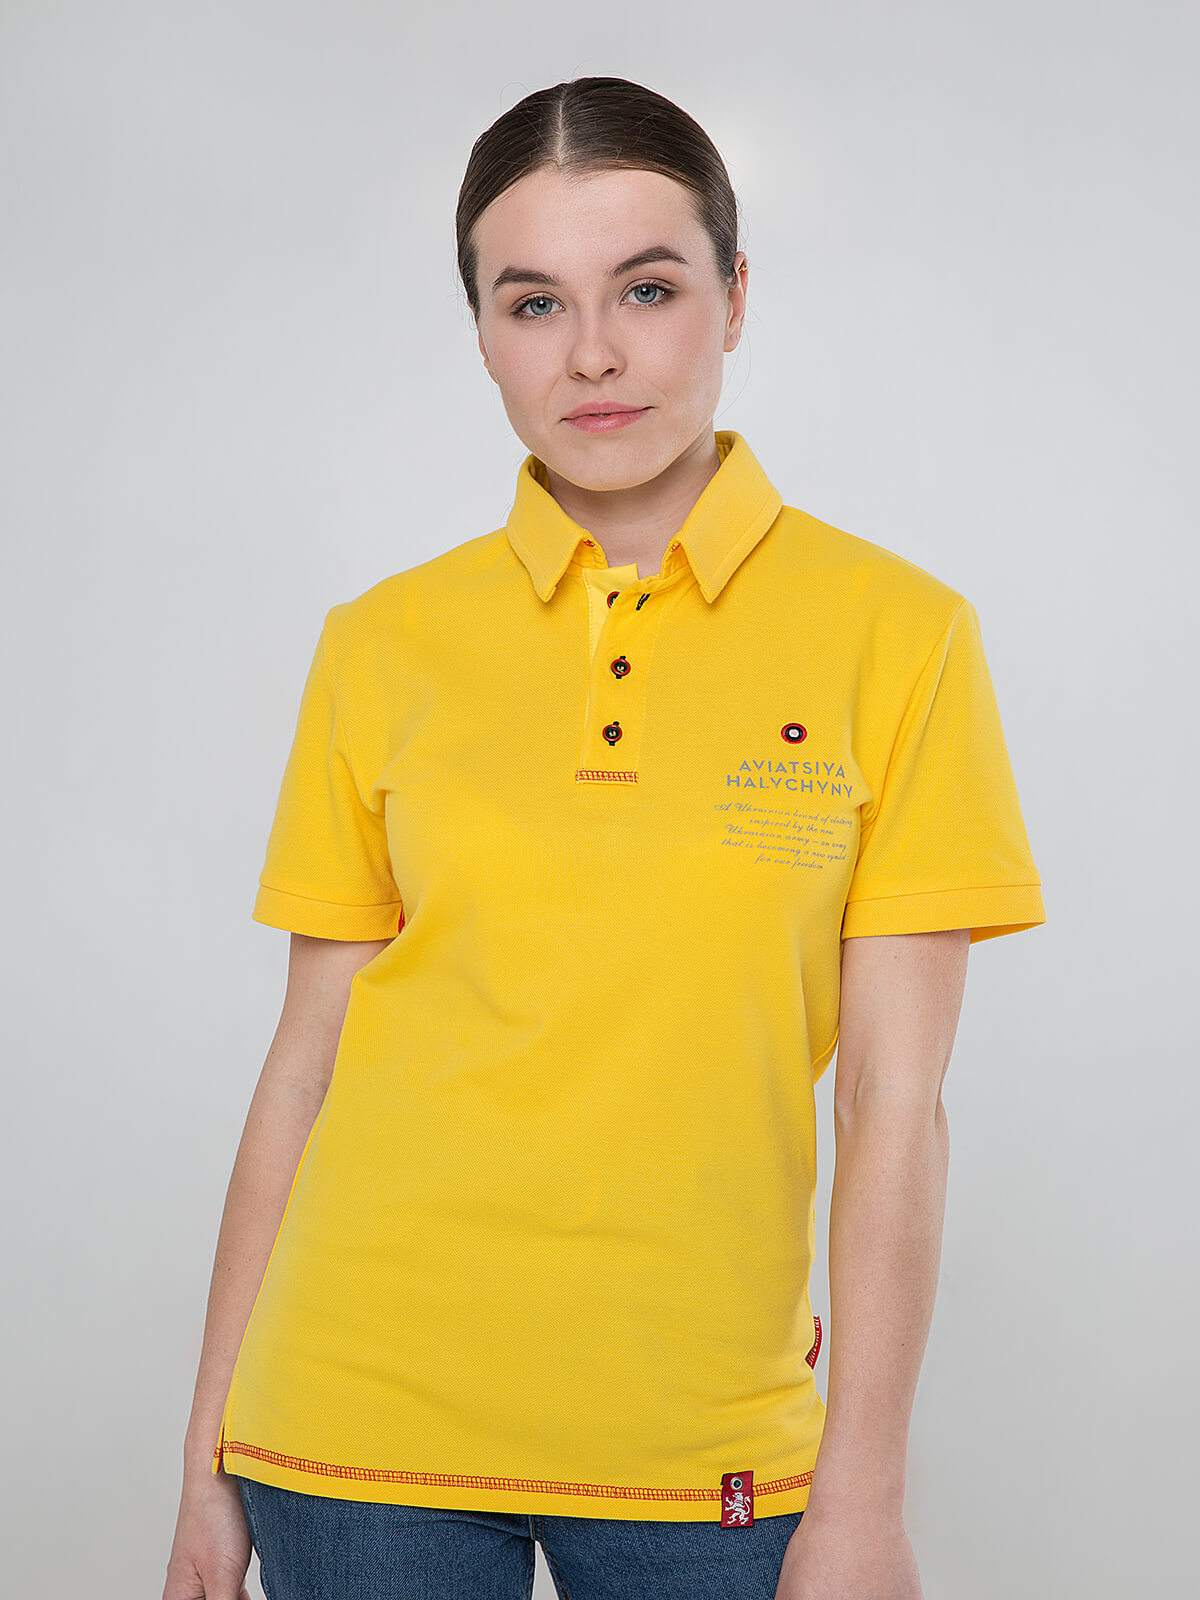 Women's Polo Shirt Wings. Color yellow. Unisex polo (men’s sizes).